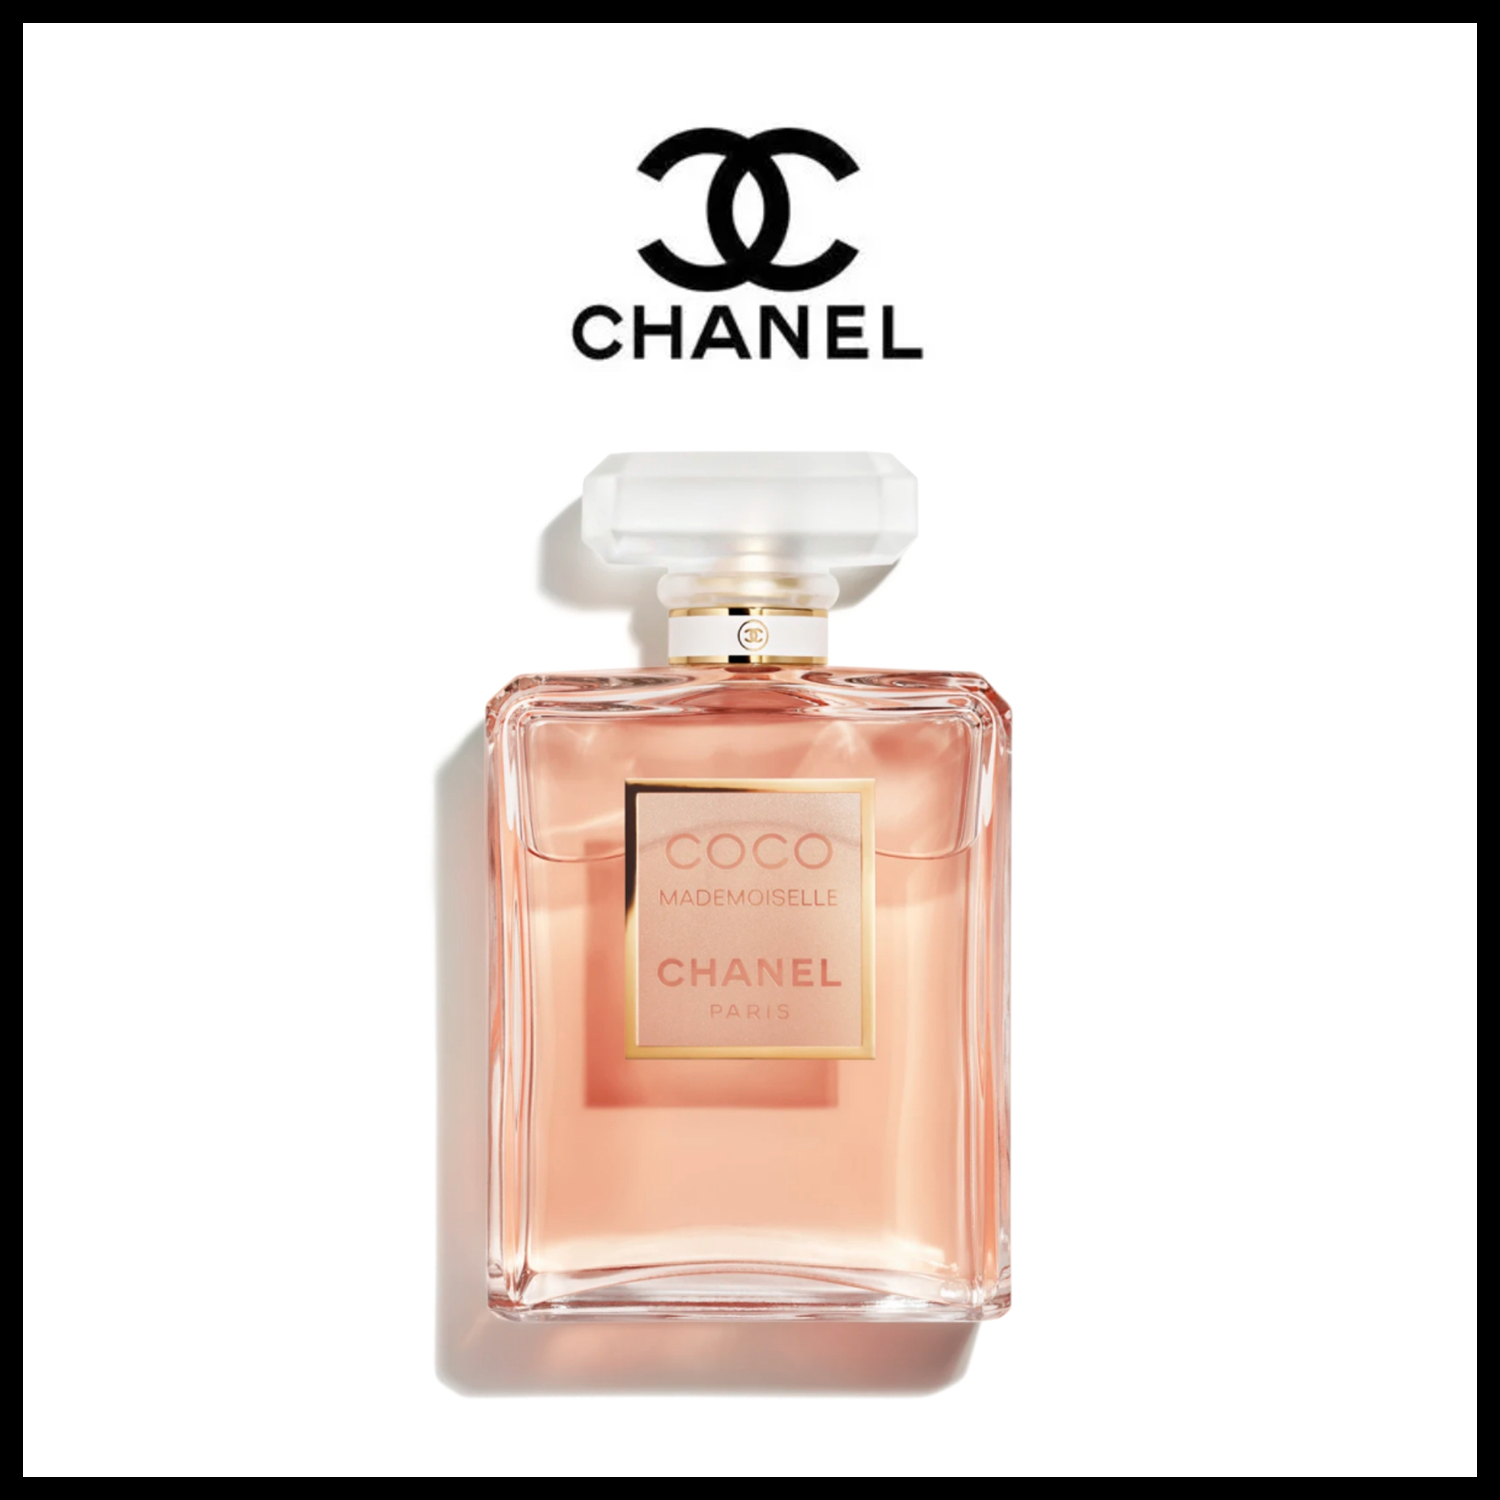 CHANEL Coco Mademoiselle Limited Xmas Edition Eau De Parfum Spray 100ml   eBay